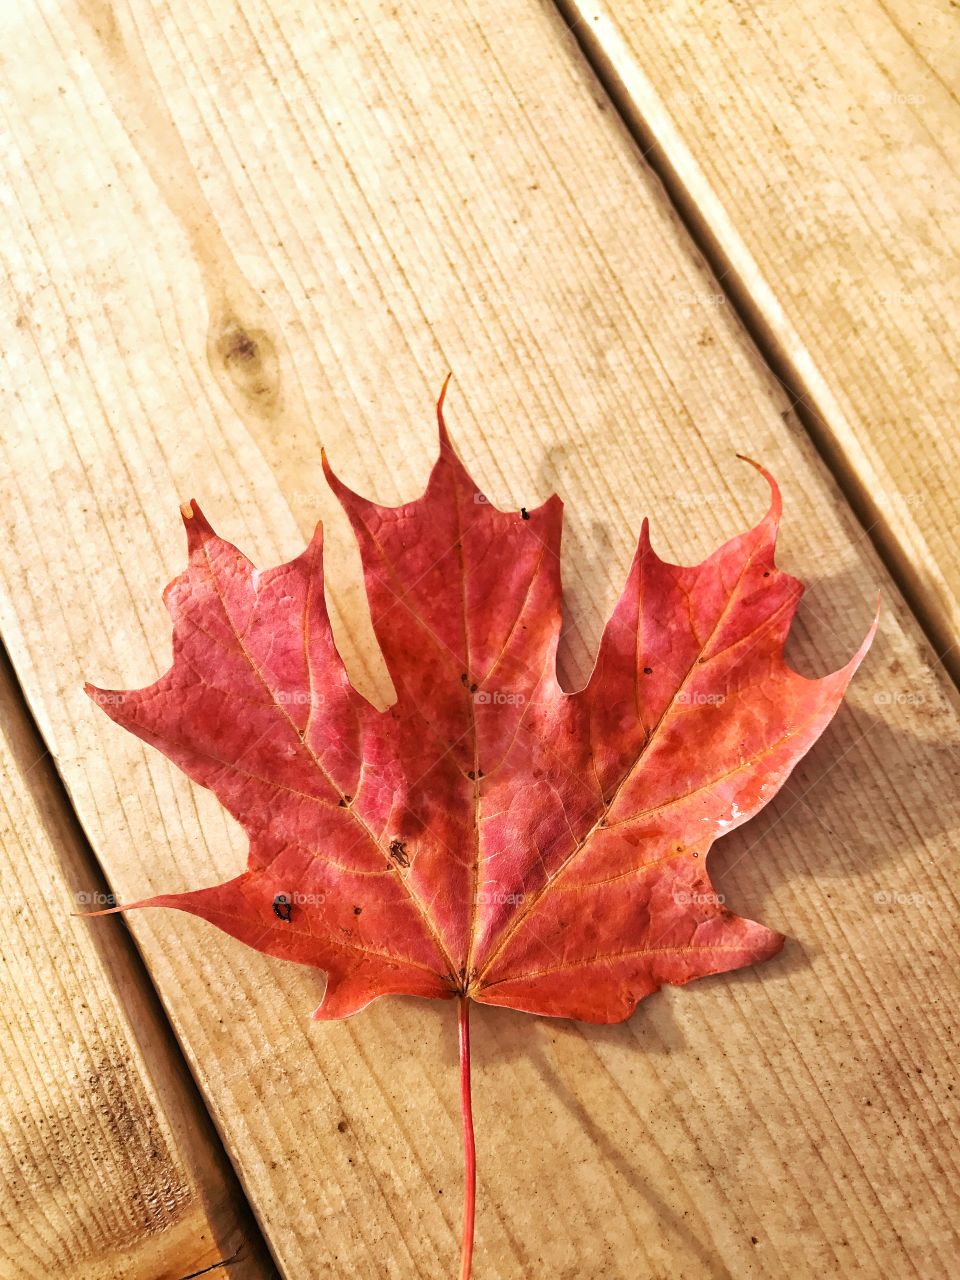 Wood, Leaf, Fall, Wooden, Maple